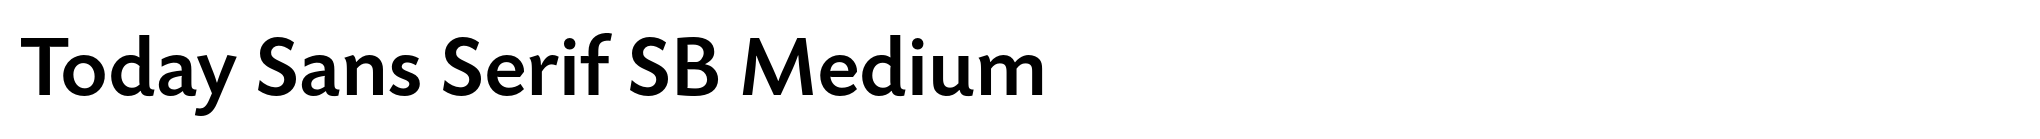 Today Sans Serif SB Medium image